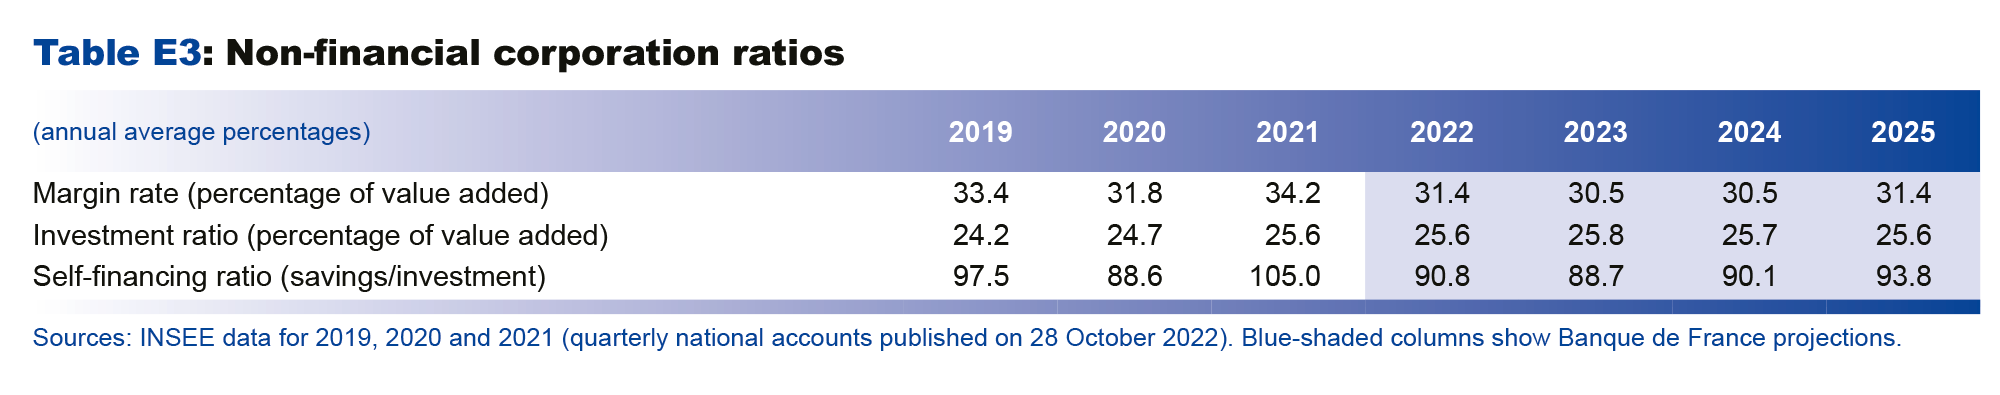 Macroeconomic projections – December 2022 - Non-financial corporation ratios